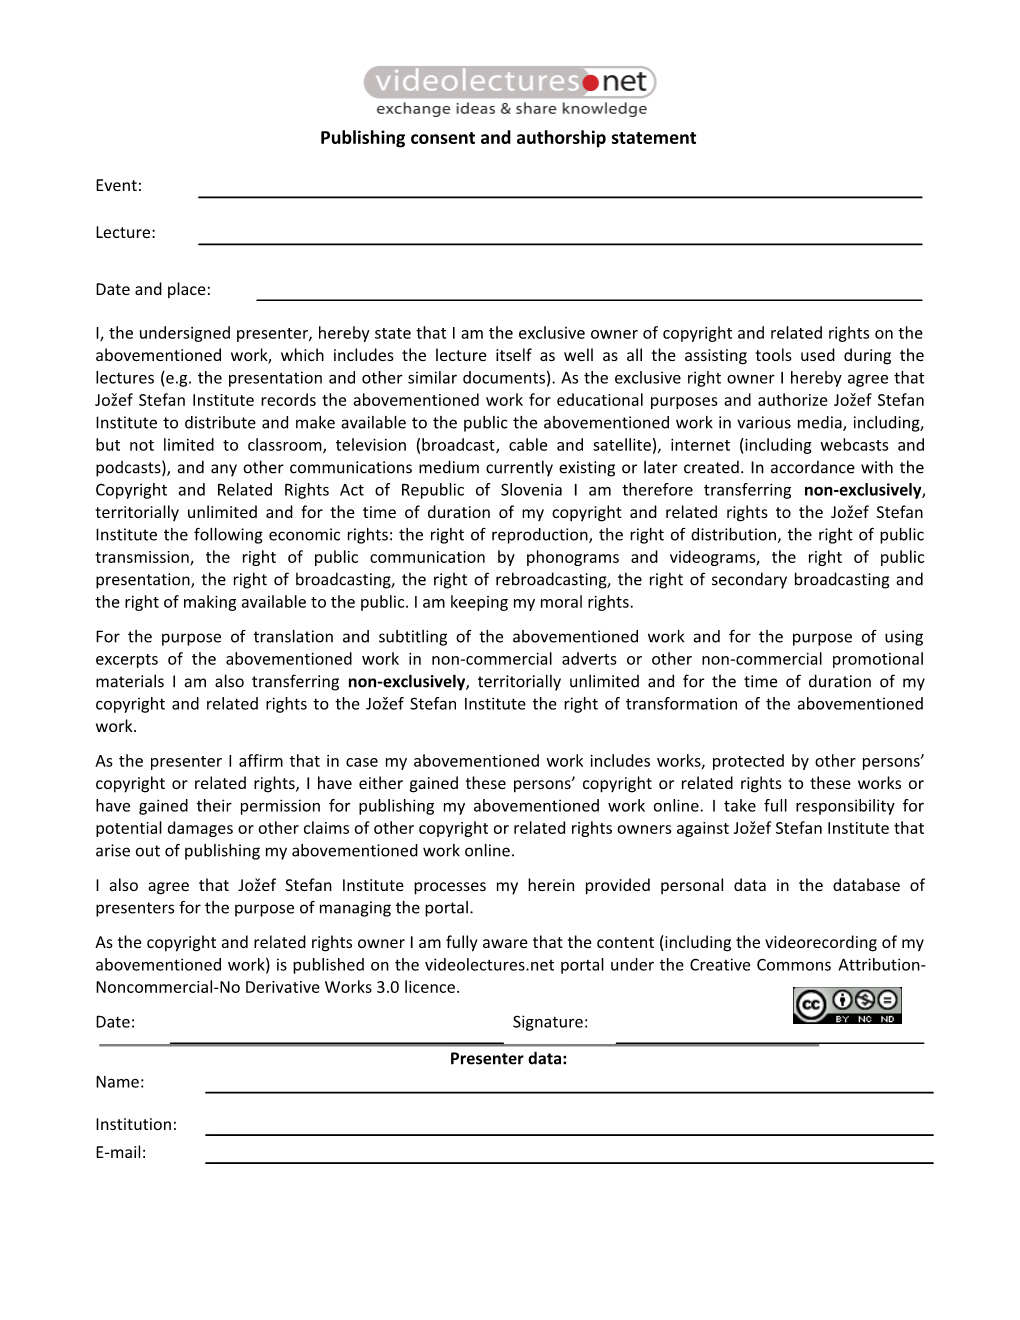 Publishing Consent and Authorship Statement